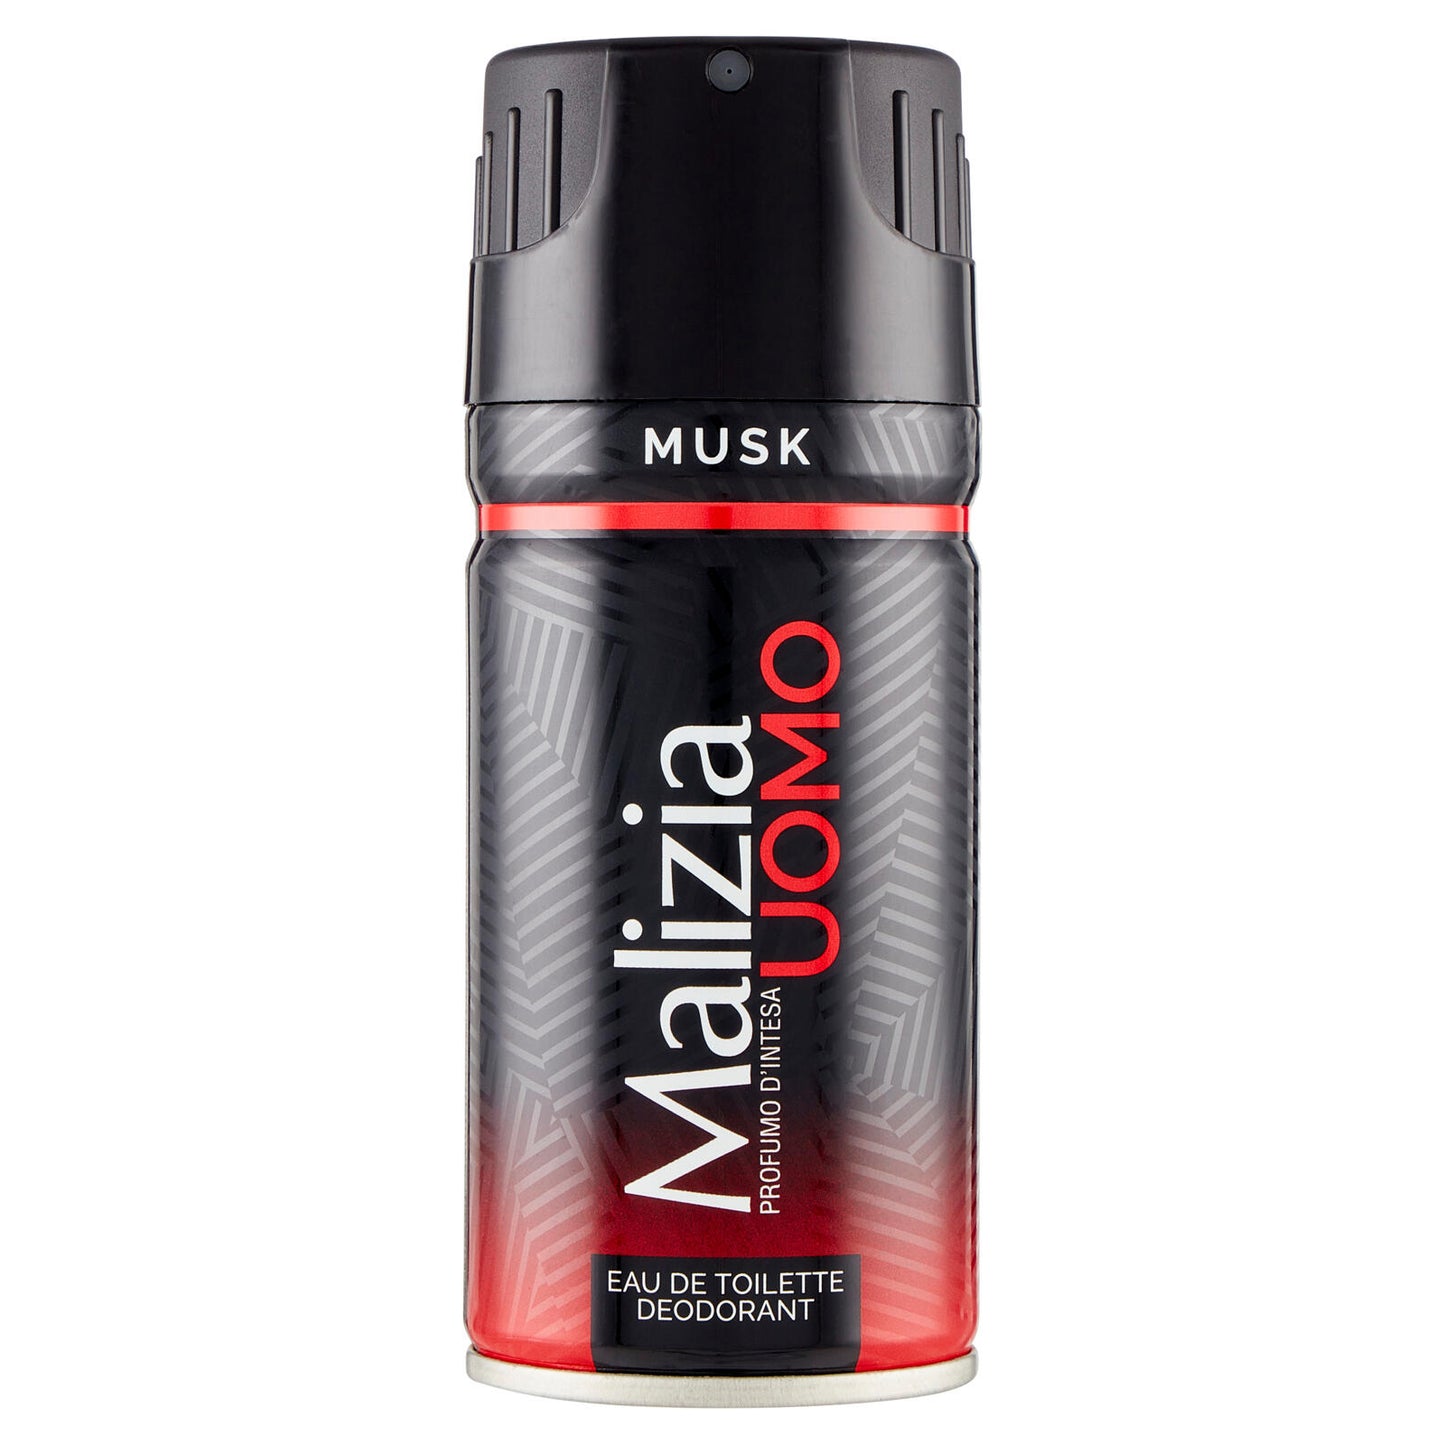 Malizia Uomo Musk Eau de Toilette Deodorant 150 mL